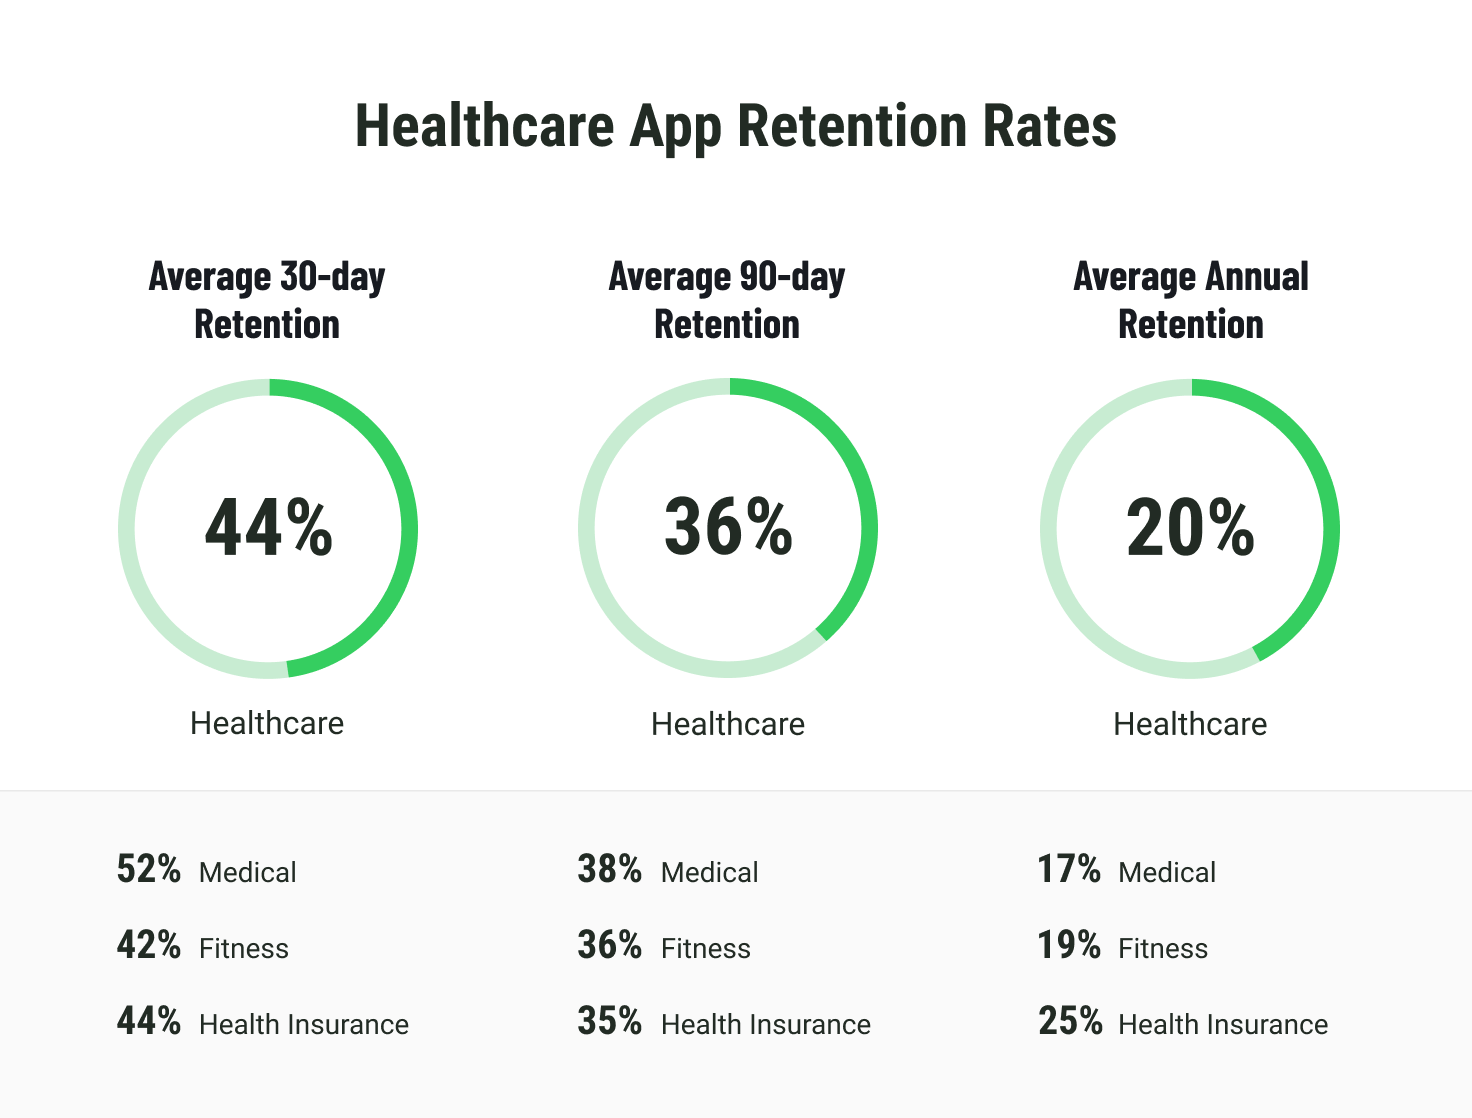 Healthcare app retention rates